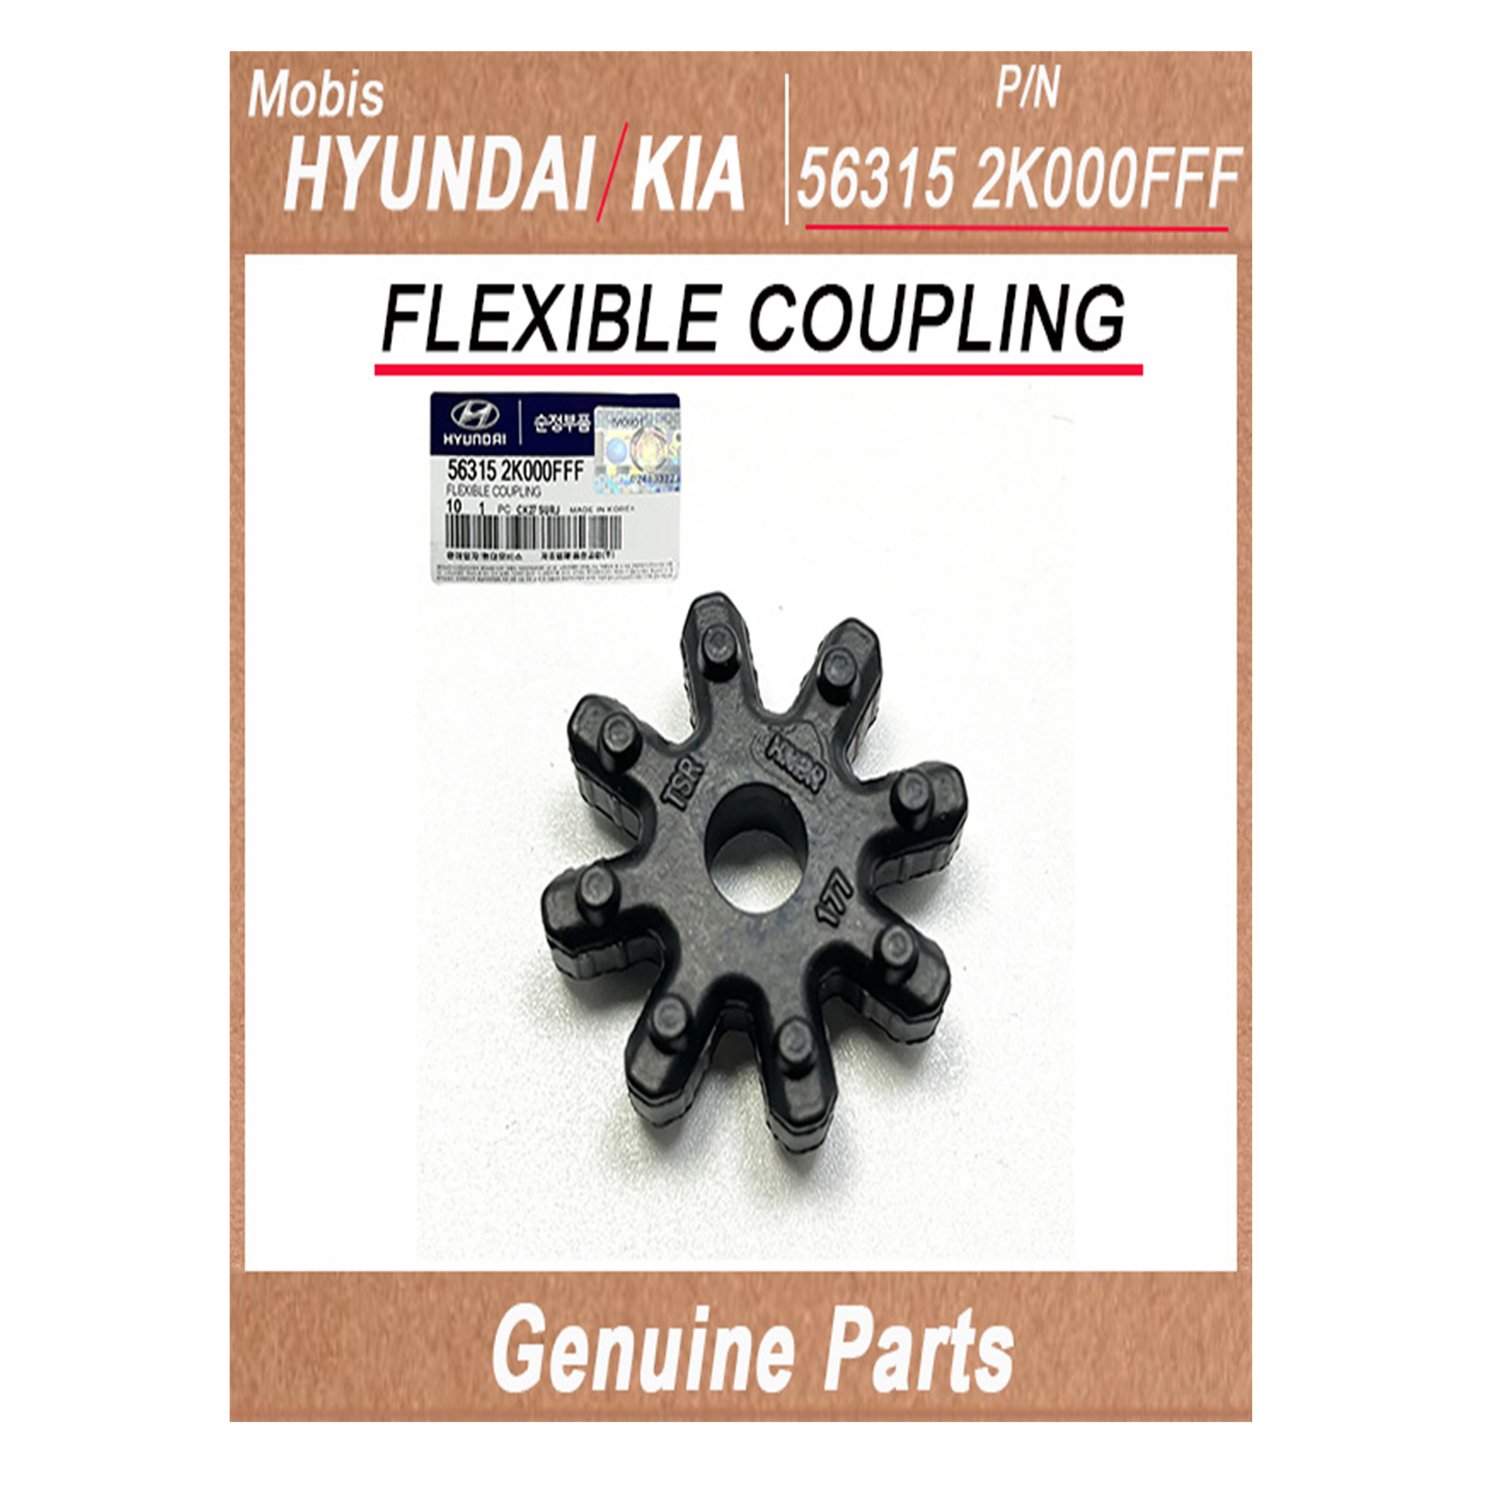 563152K000FFF _ FLEXIBLE COUPLING _ Genuine Korean Automotive Spare Parts _ Hyundai Kia _Mobis_